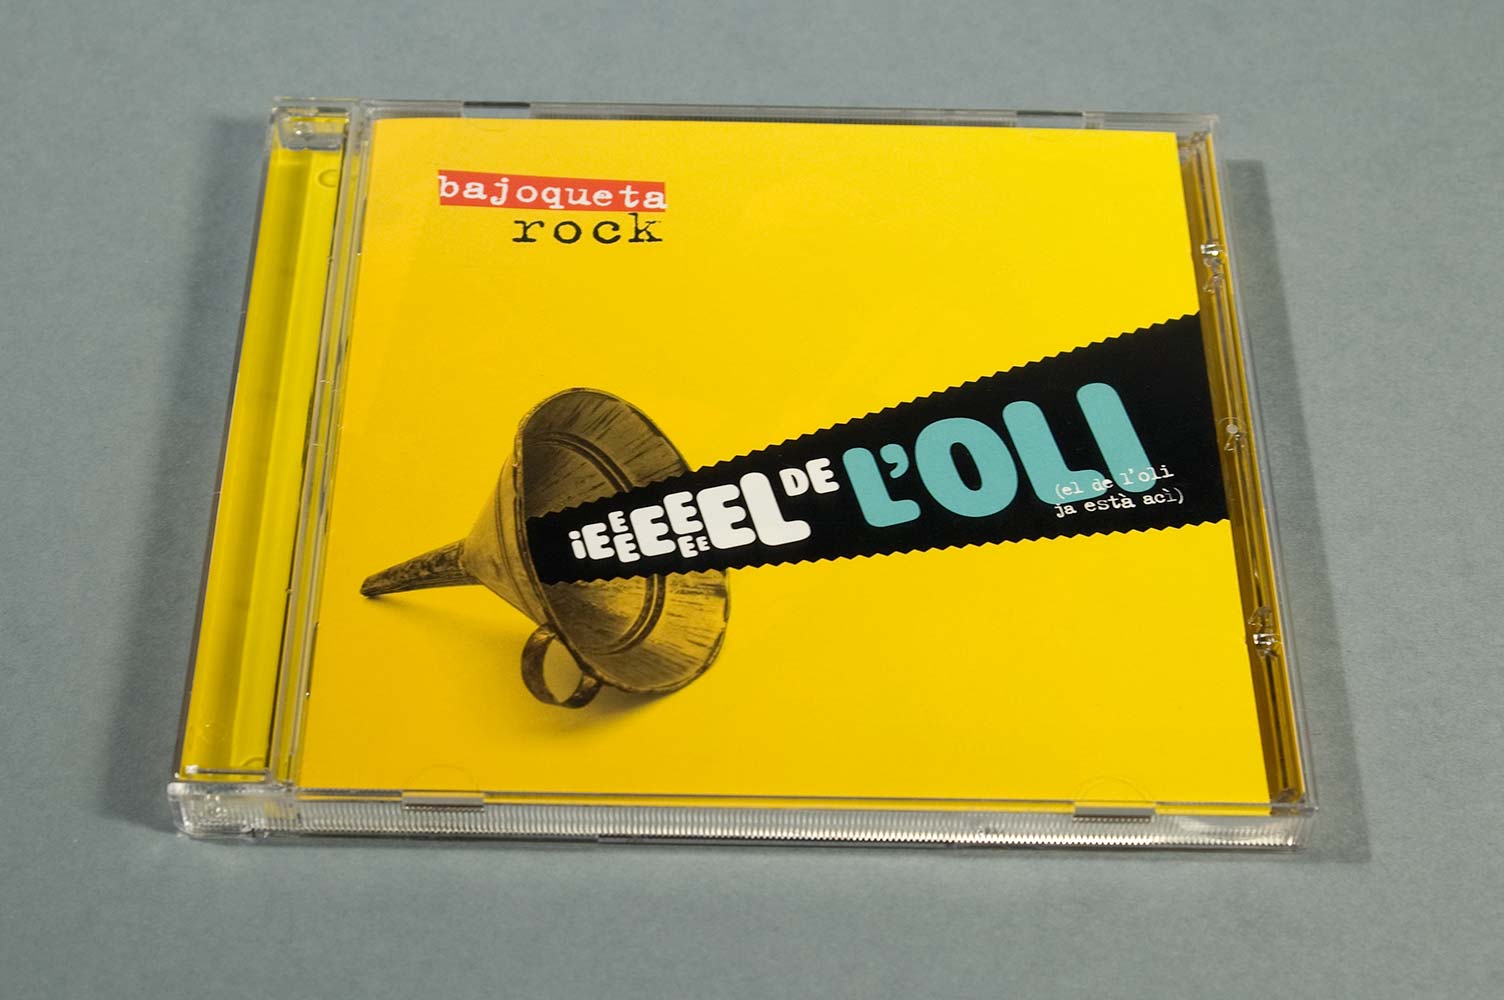 Diseño CD Bajoqueta rock "el del oli"